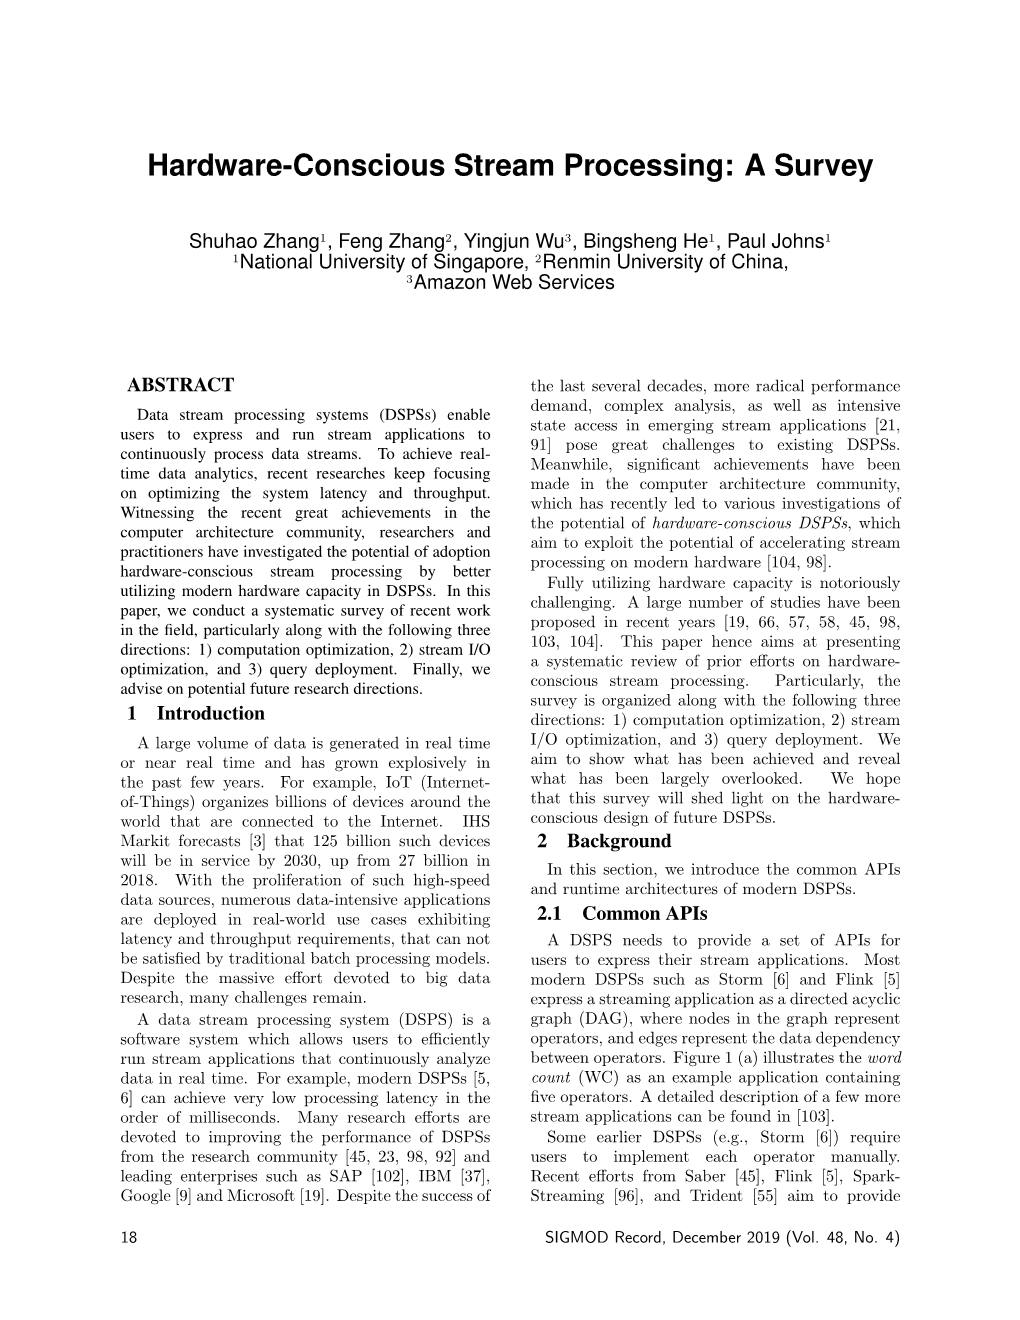 Hardware-Conscious Stream Processing: a Survey